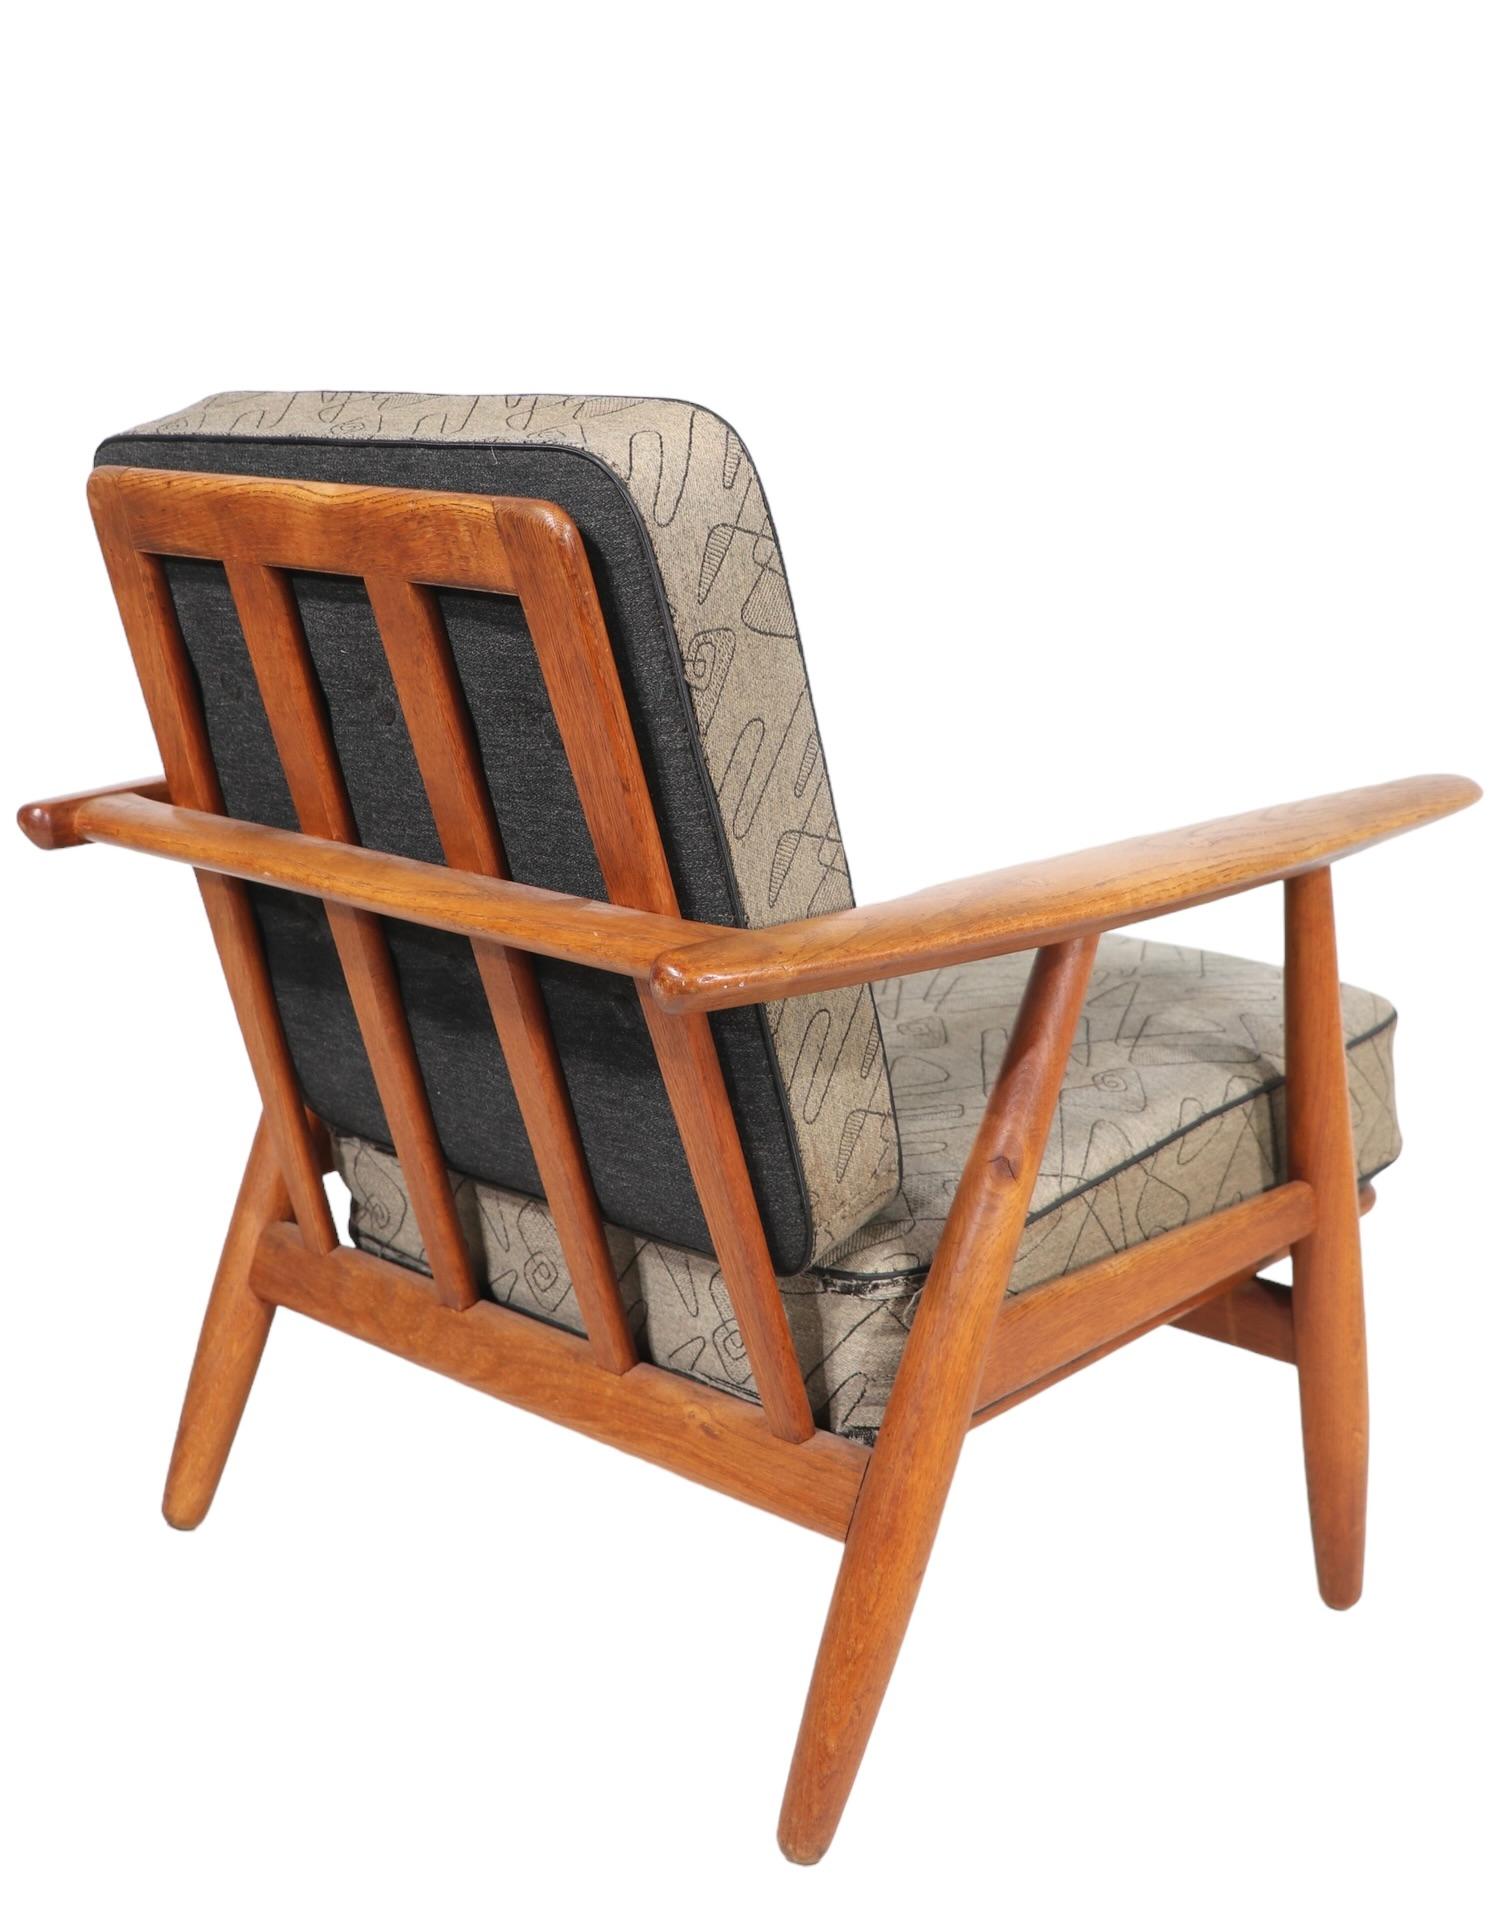 Original Hans Wegner Cigar Chair Made in Denmark for GETAMA c 1950's For Sale 6